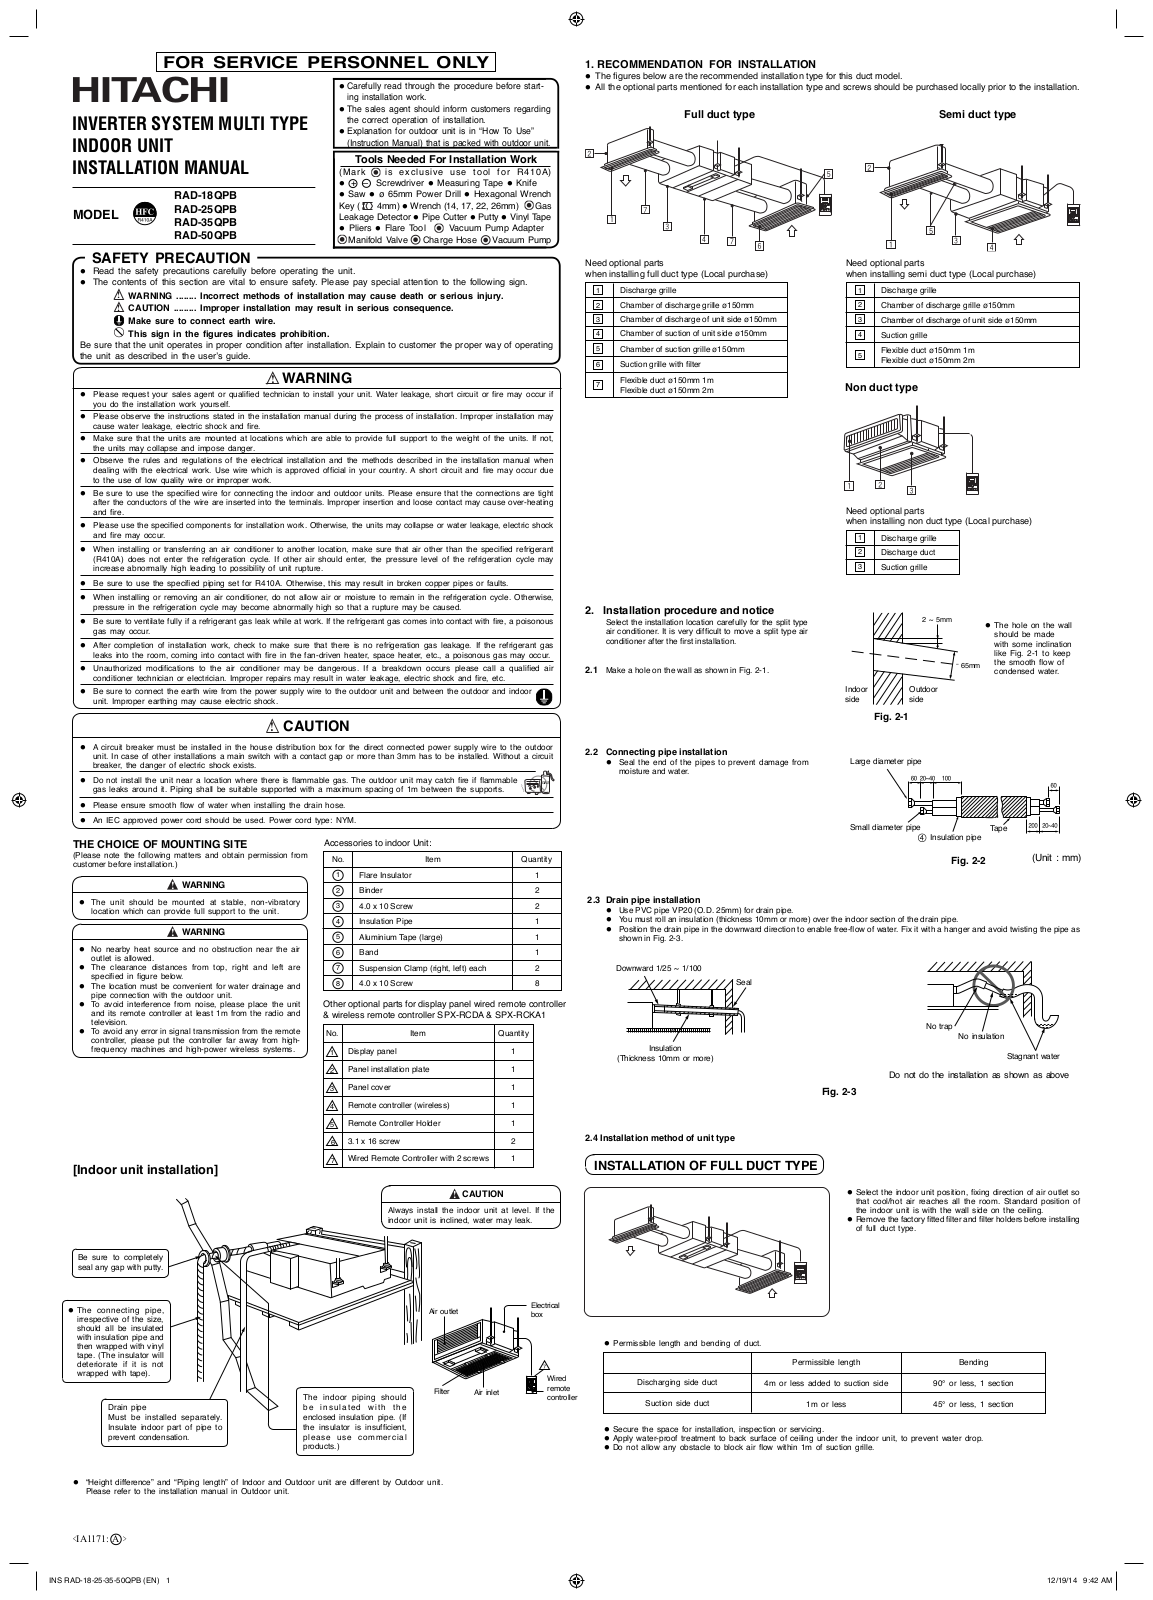 Hitachi RAD-18QPB, RAD-25QPB, RAD-50QPB, RAD-35QPB Installation guide